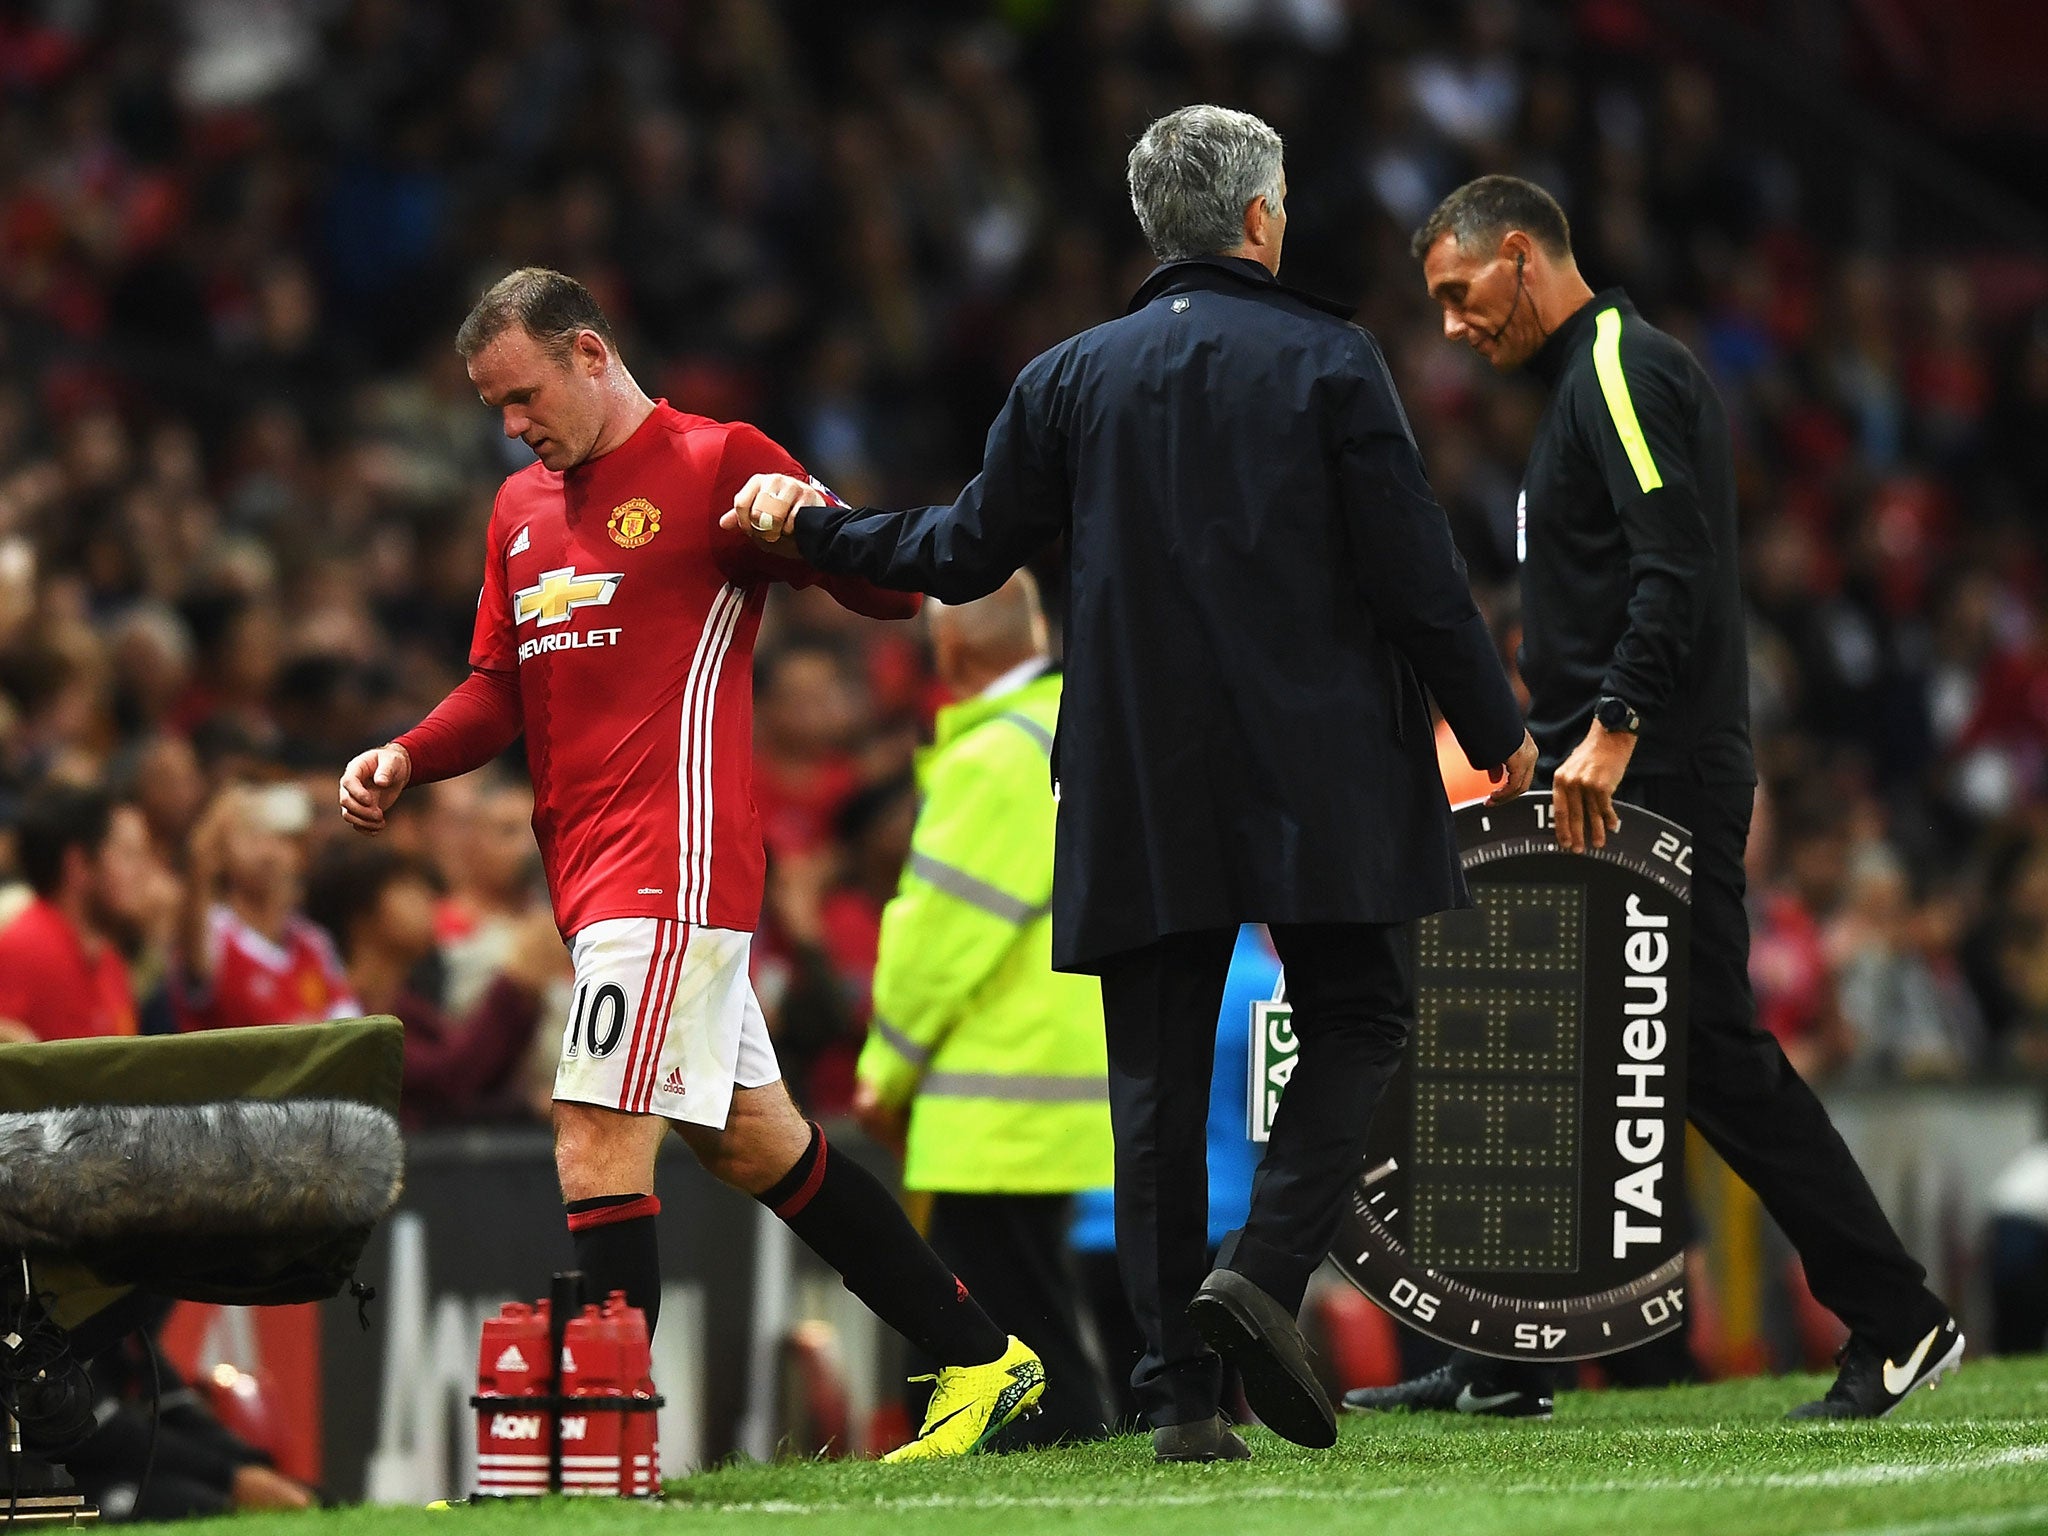 Rooney's future under Mourinho is now in doubt